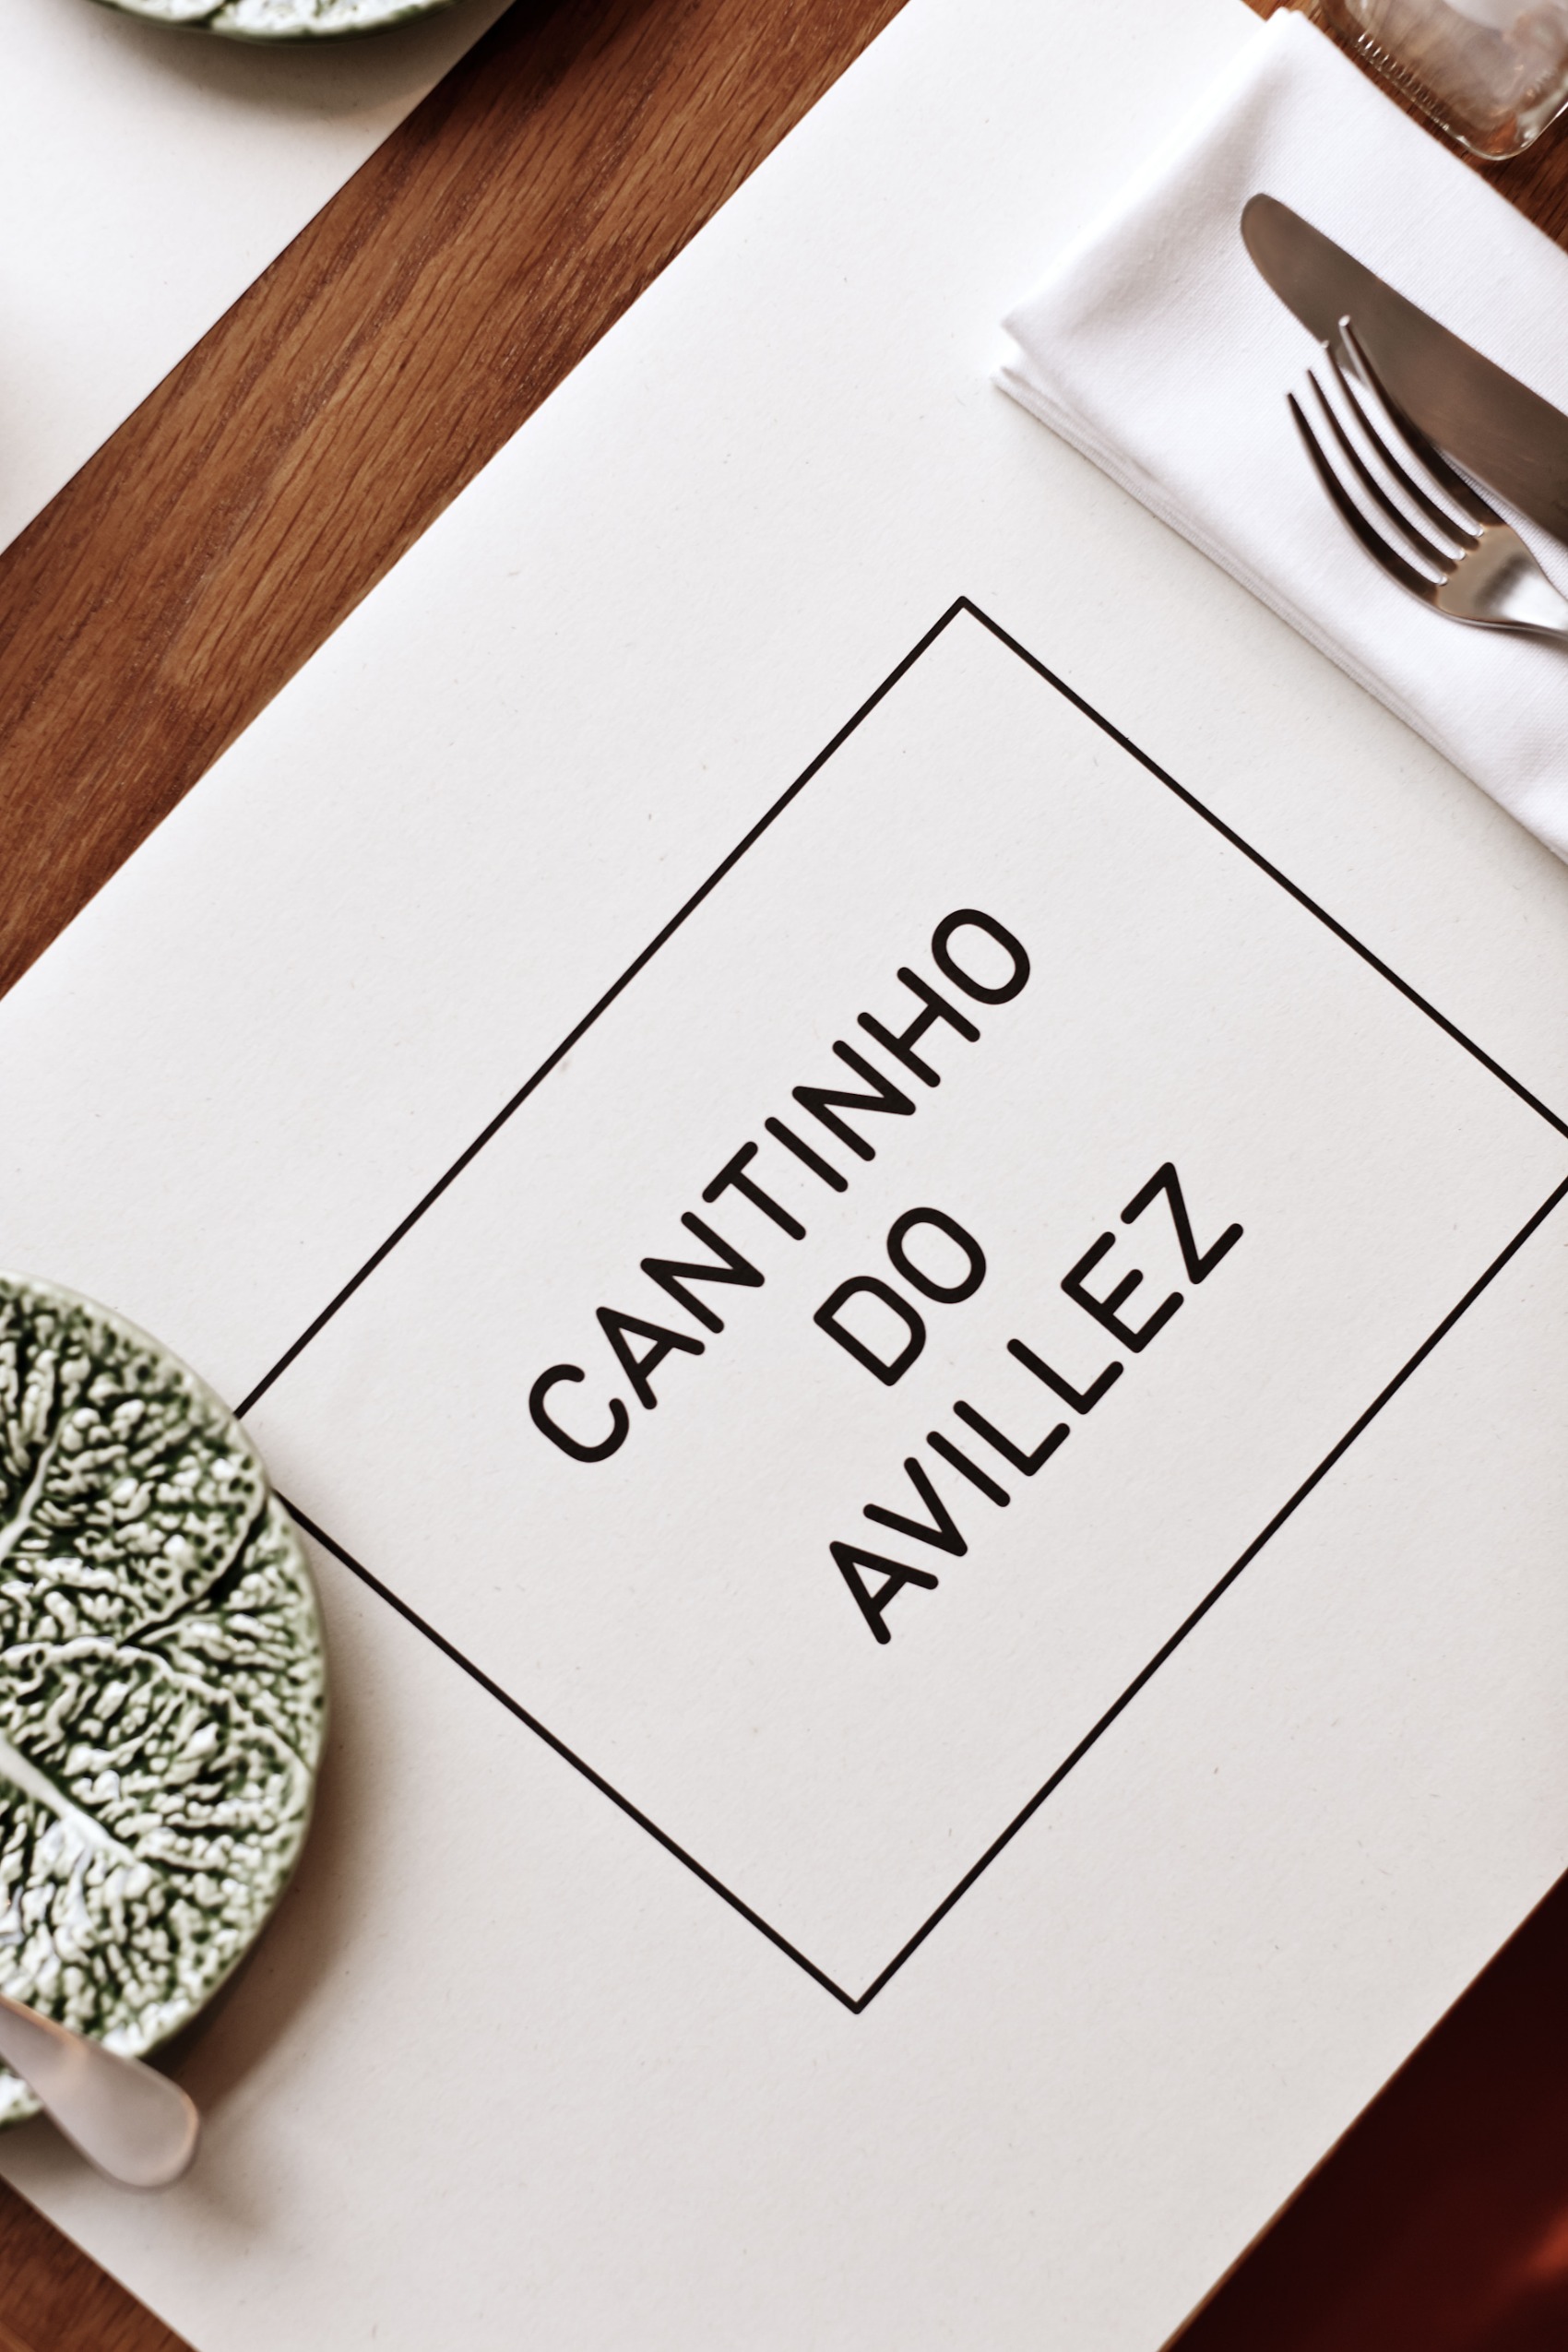 Cantinho Avillez CAVL Restaurant